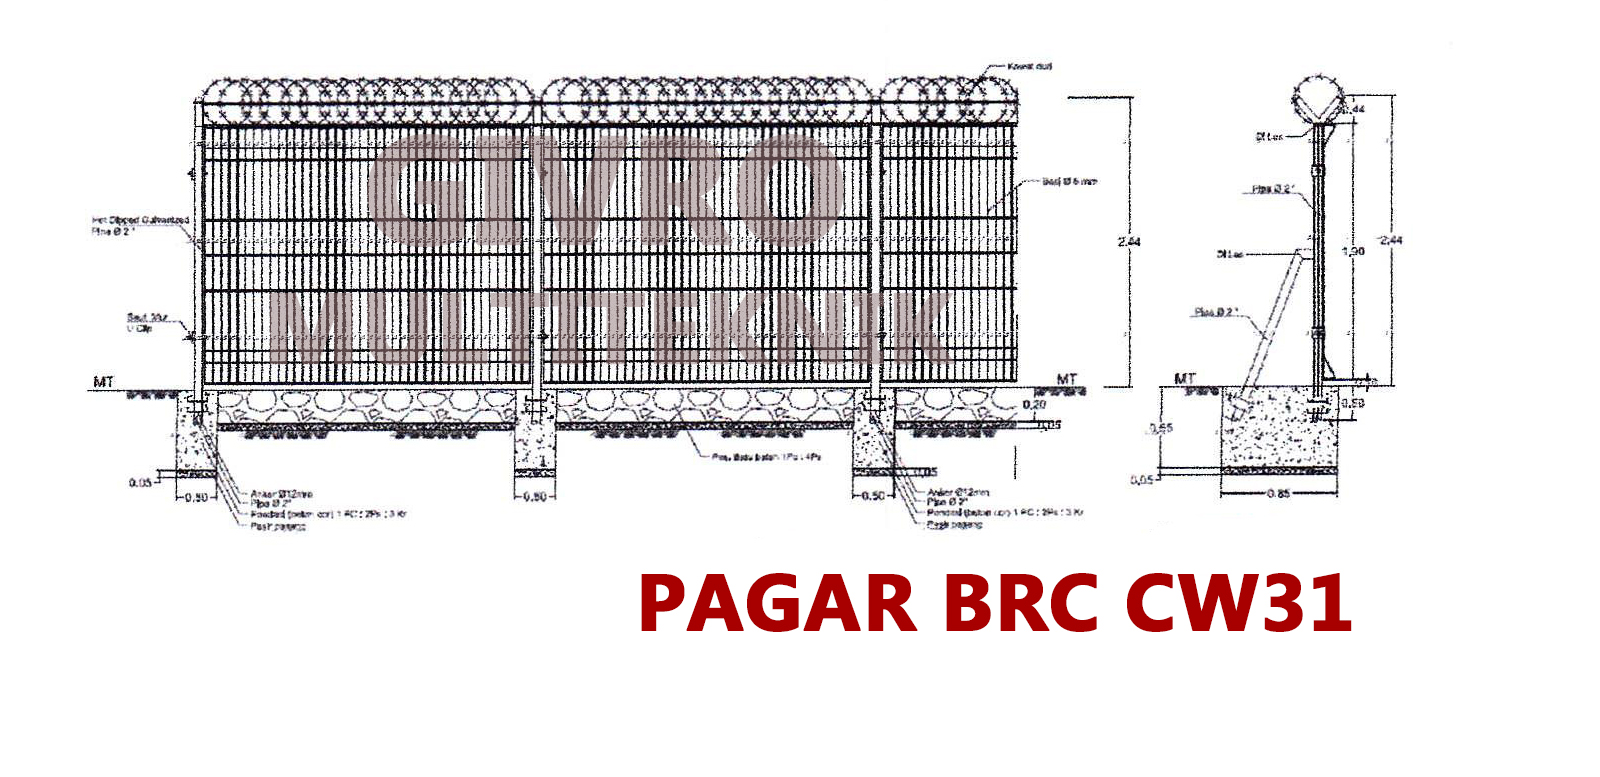 Spesifikasi Pagar Bandara Pagar BRC Wiremesh Harmonika 